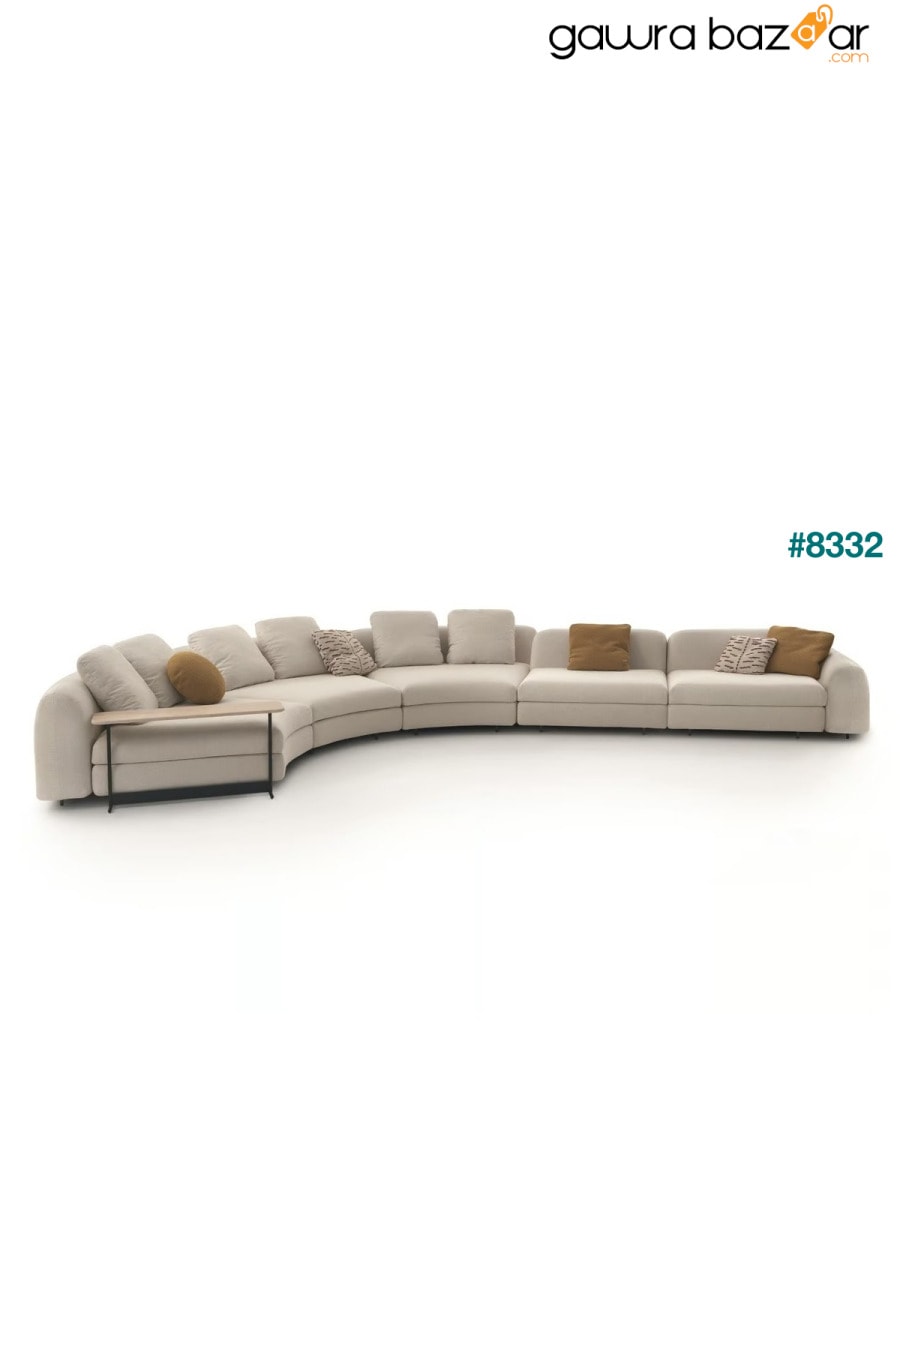 Parlex-A طقم أريكة تيدي بيضاوي الشكل مكون من 5 قطع من طاولة القهوة في غرفة المعيشة ومجموعة L في الزاوية الوظيفية Passion 4